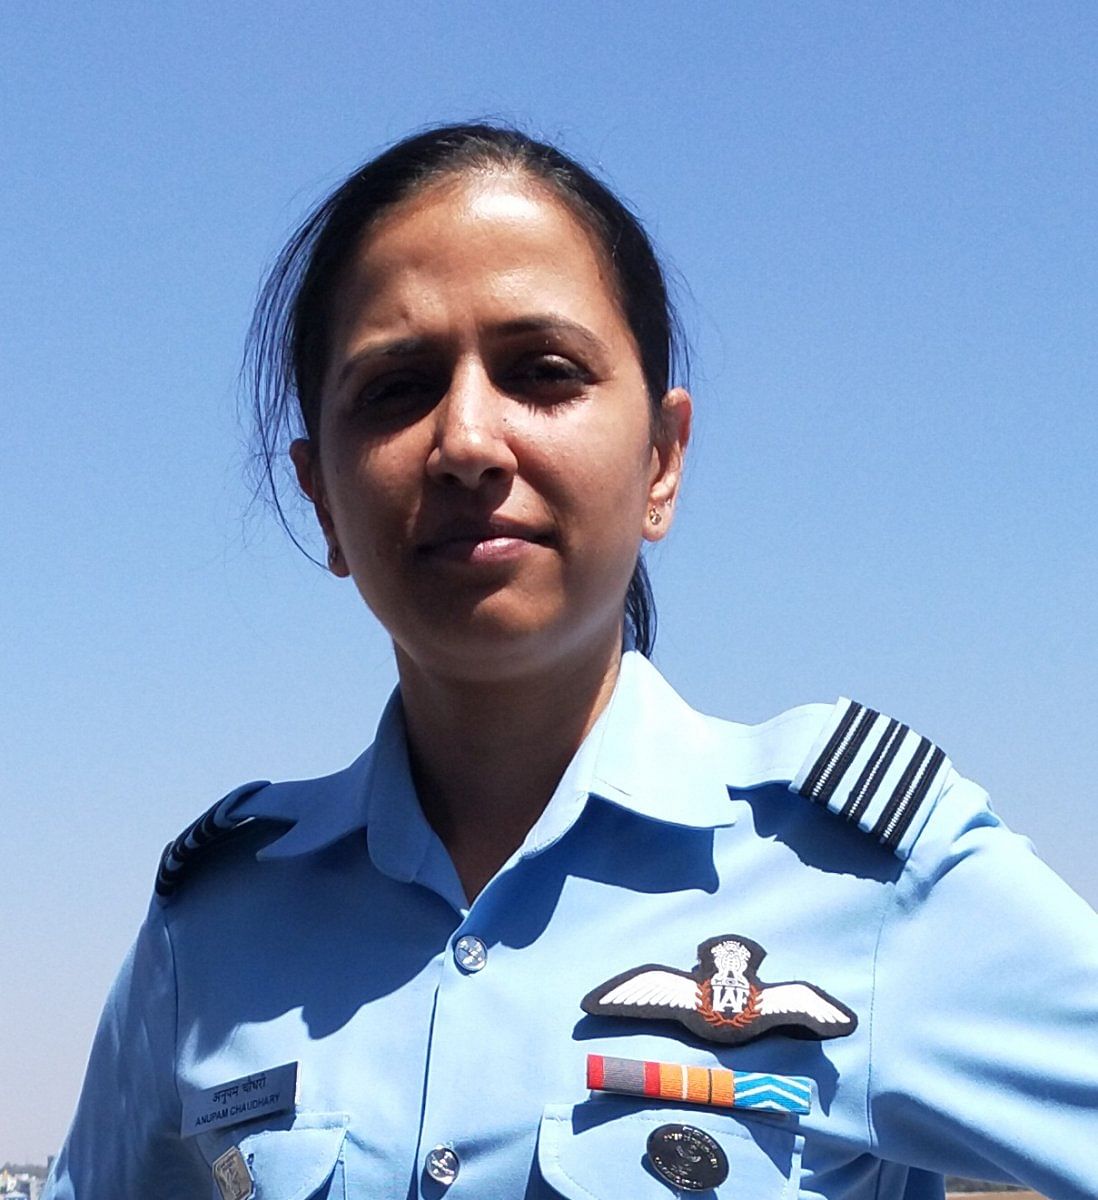 Squadron leader AnupamChaudhary